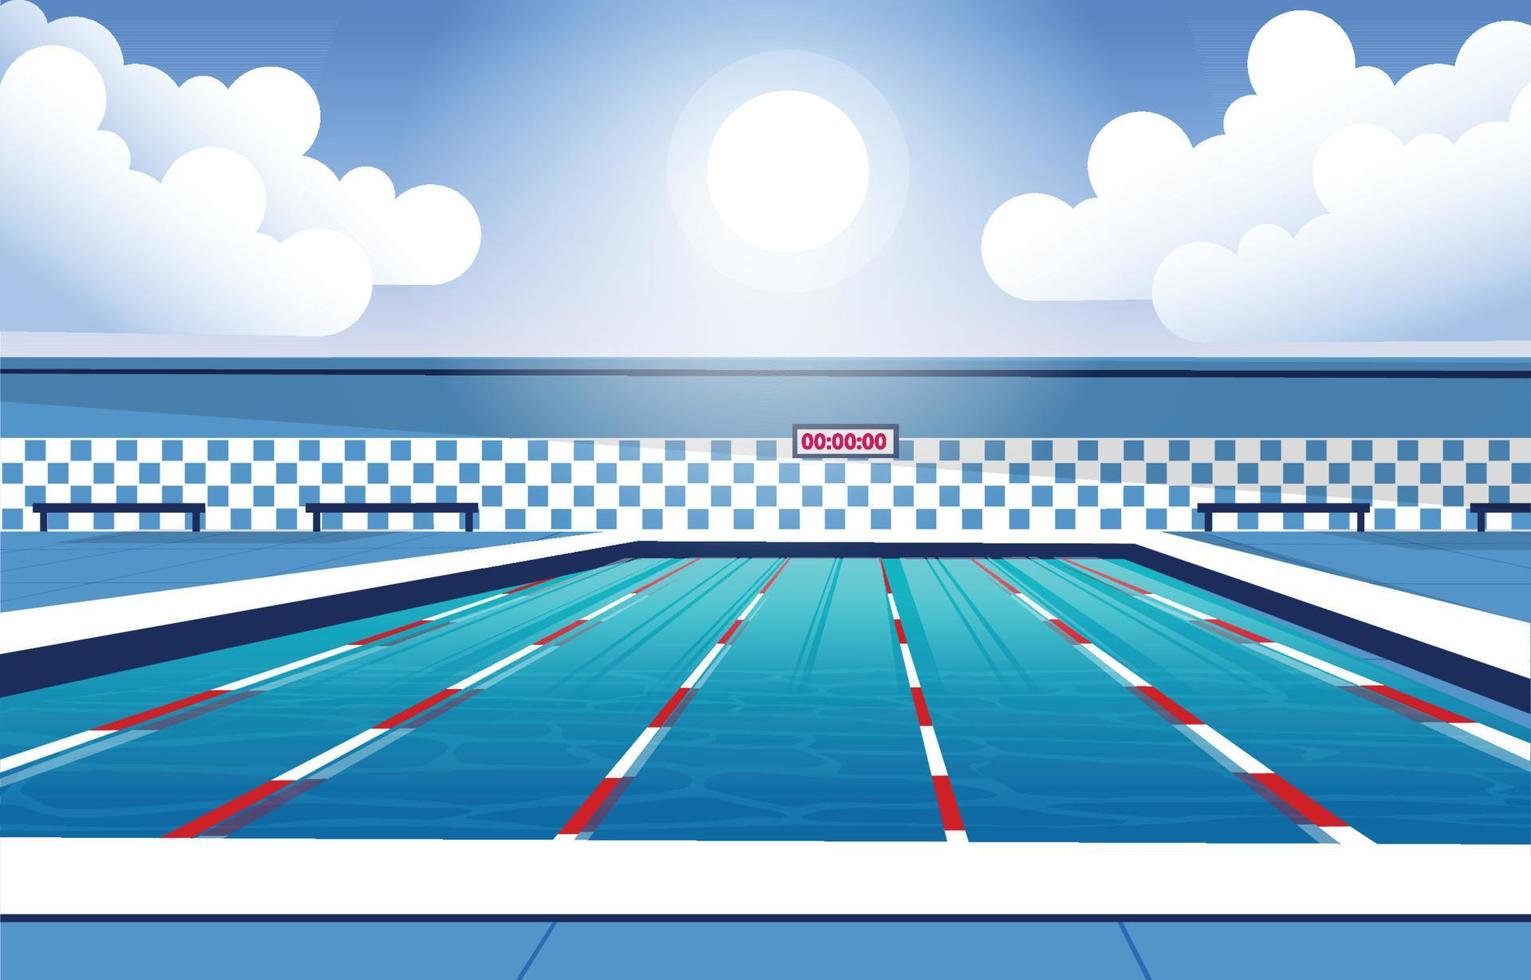 Swimming Pool Arena Swim Lane Sport Competition Flat Design Illustration vector